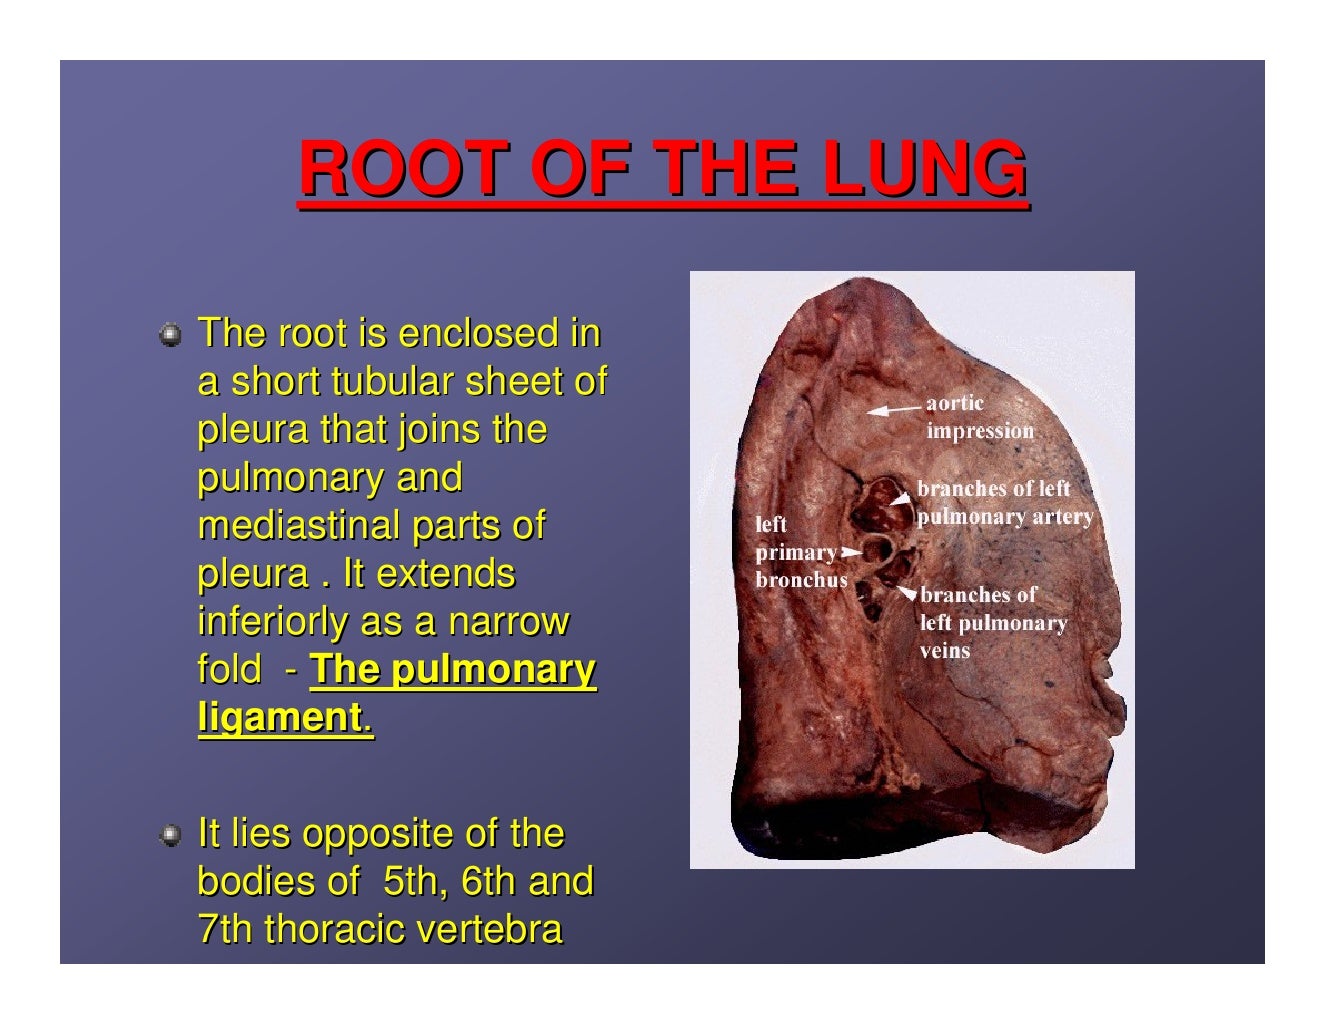 Lung anatomy.